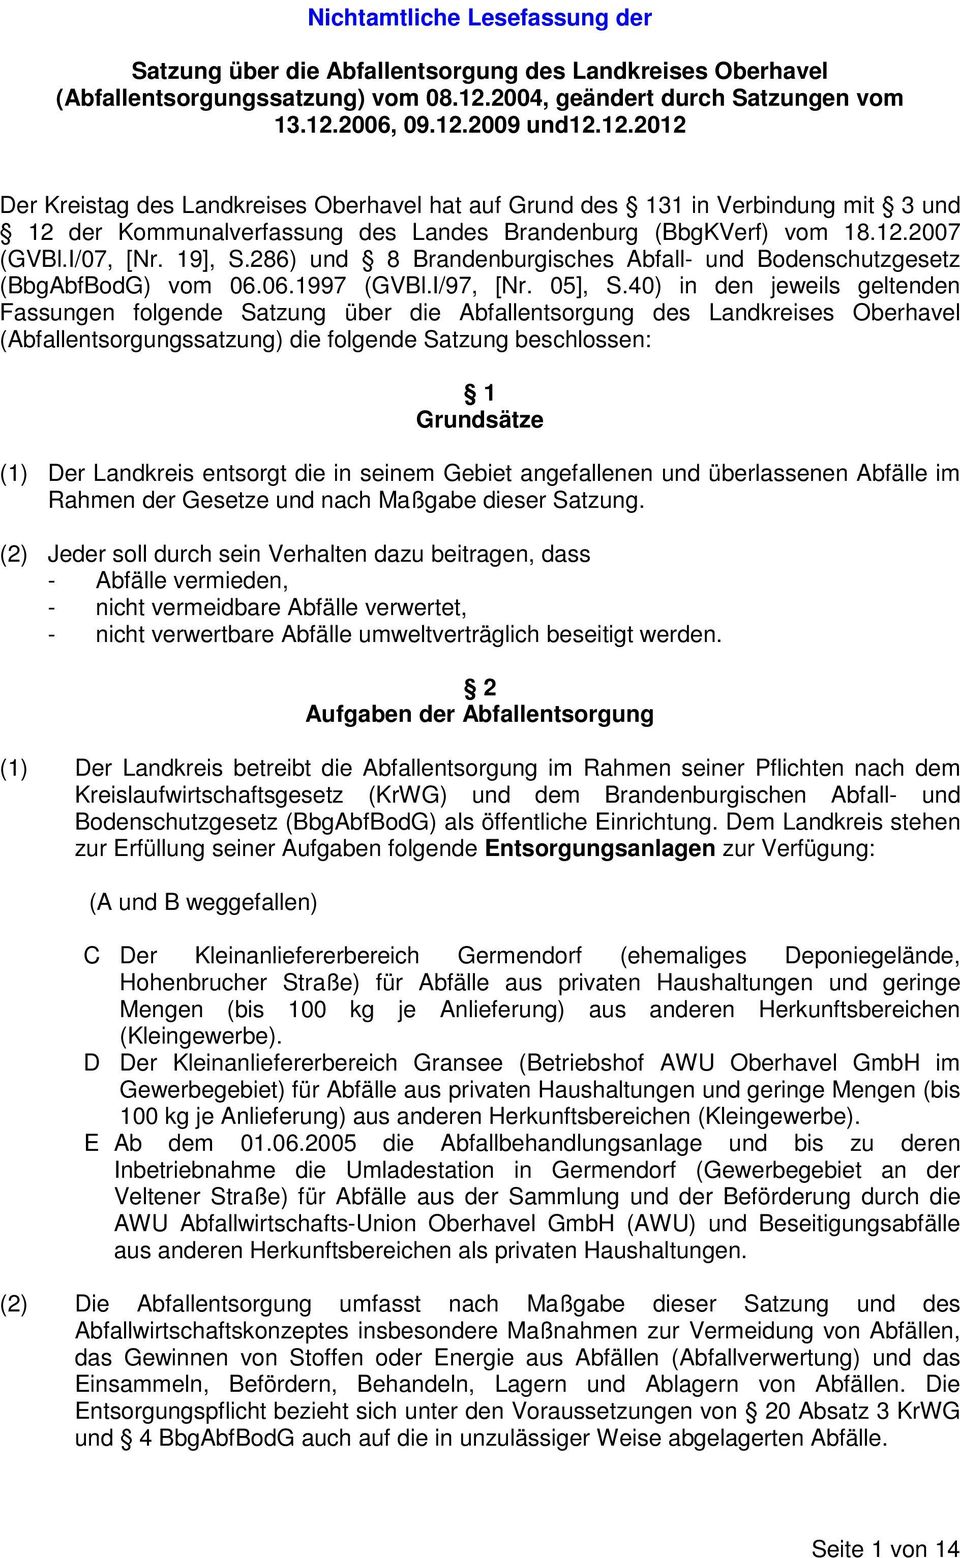 12.2007 (GVBl.I/07, [Nr. 19], S.286) und 8 Brandenburgisches Abfall- und Bodenschutzgesetz (BbgAbfBodG) vom 06.06.1997 (GVBl.I/97, [Nr. 05], S.